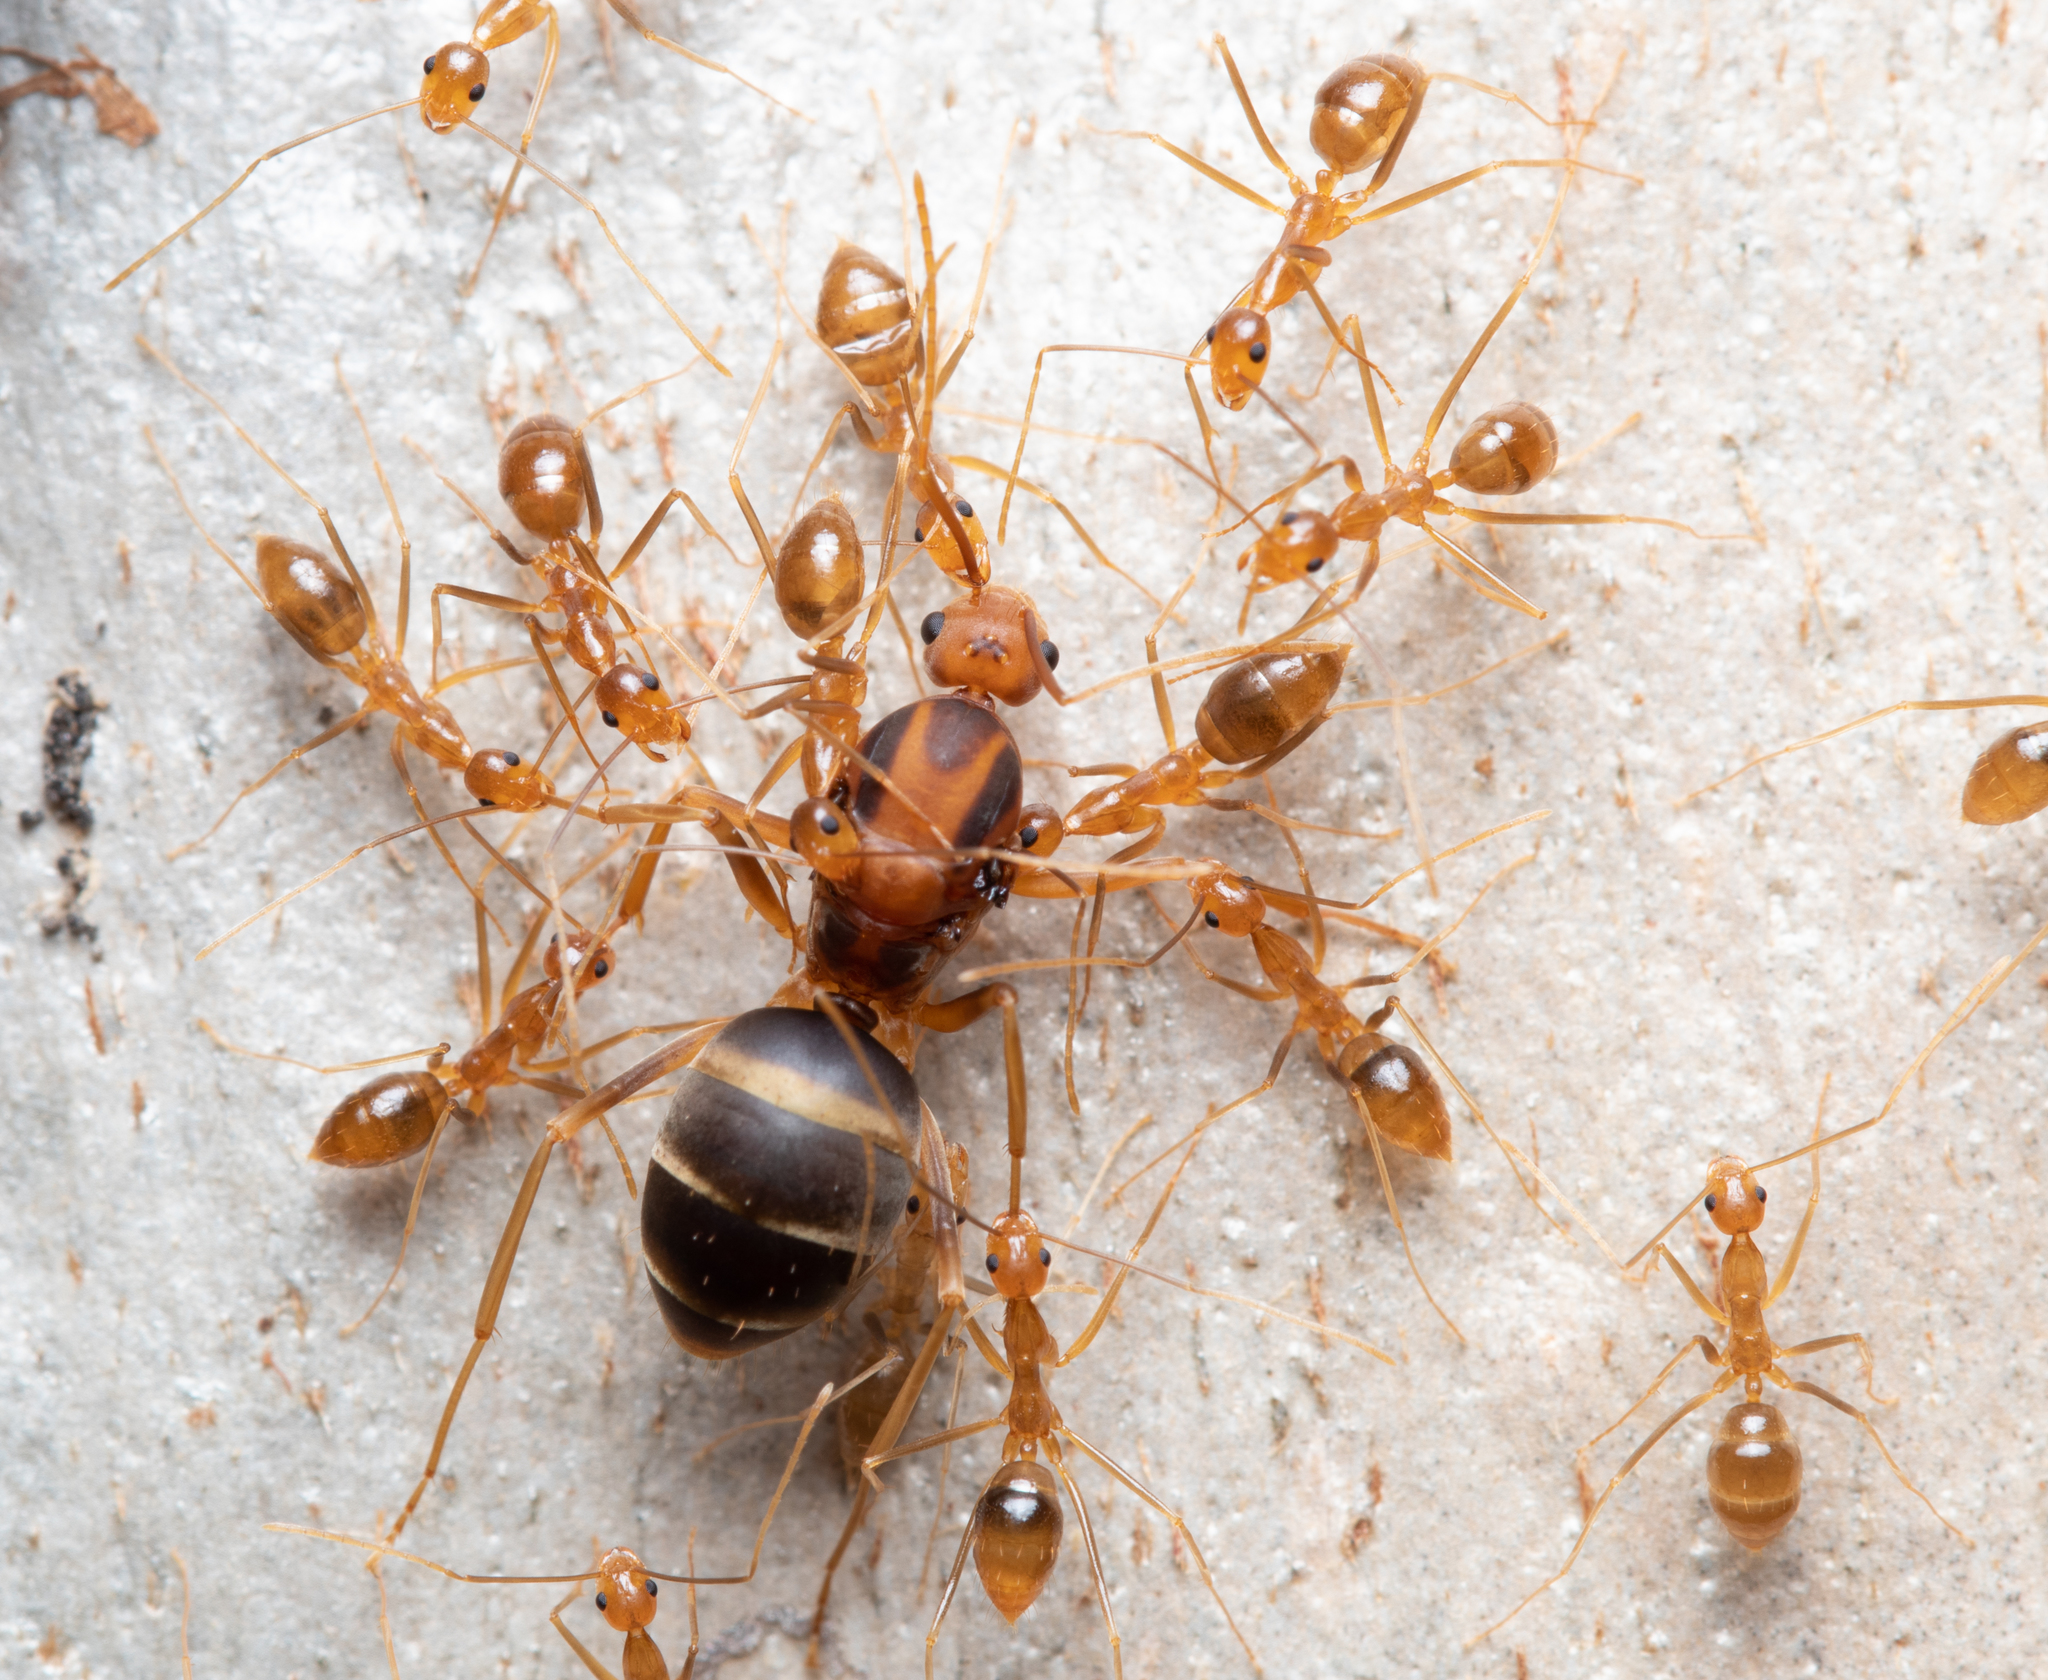 Yellow crazy ant - Wikipedia